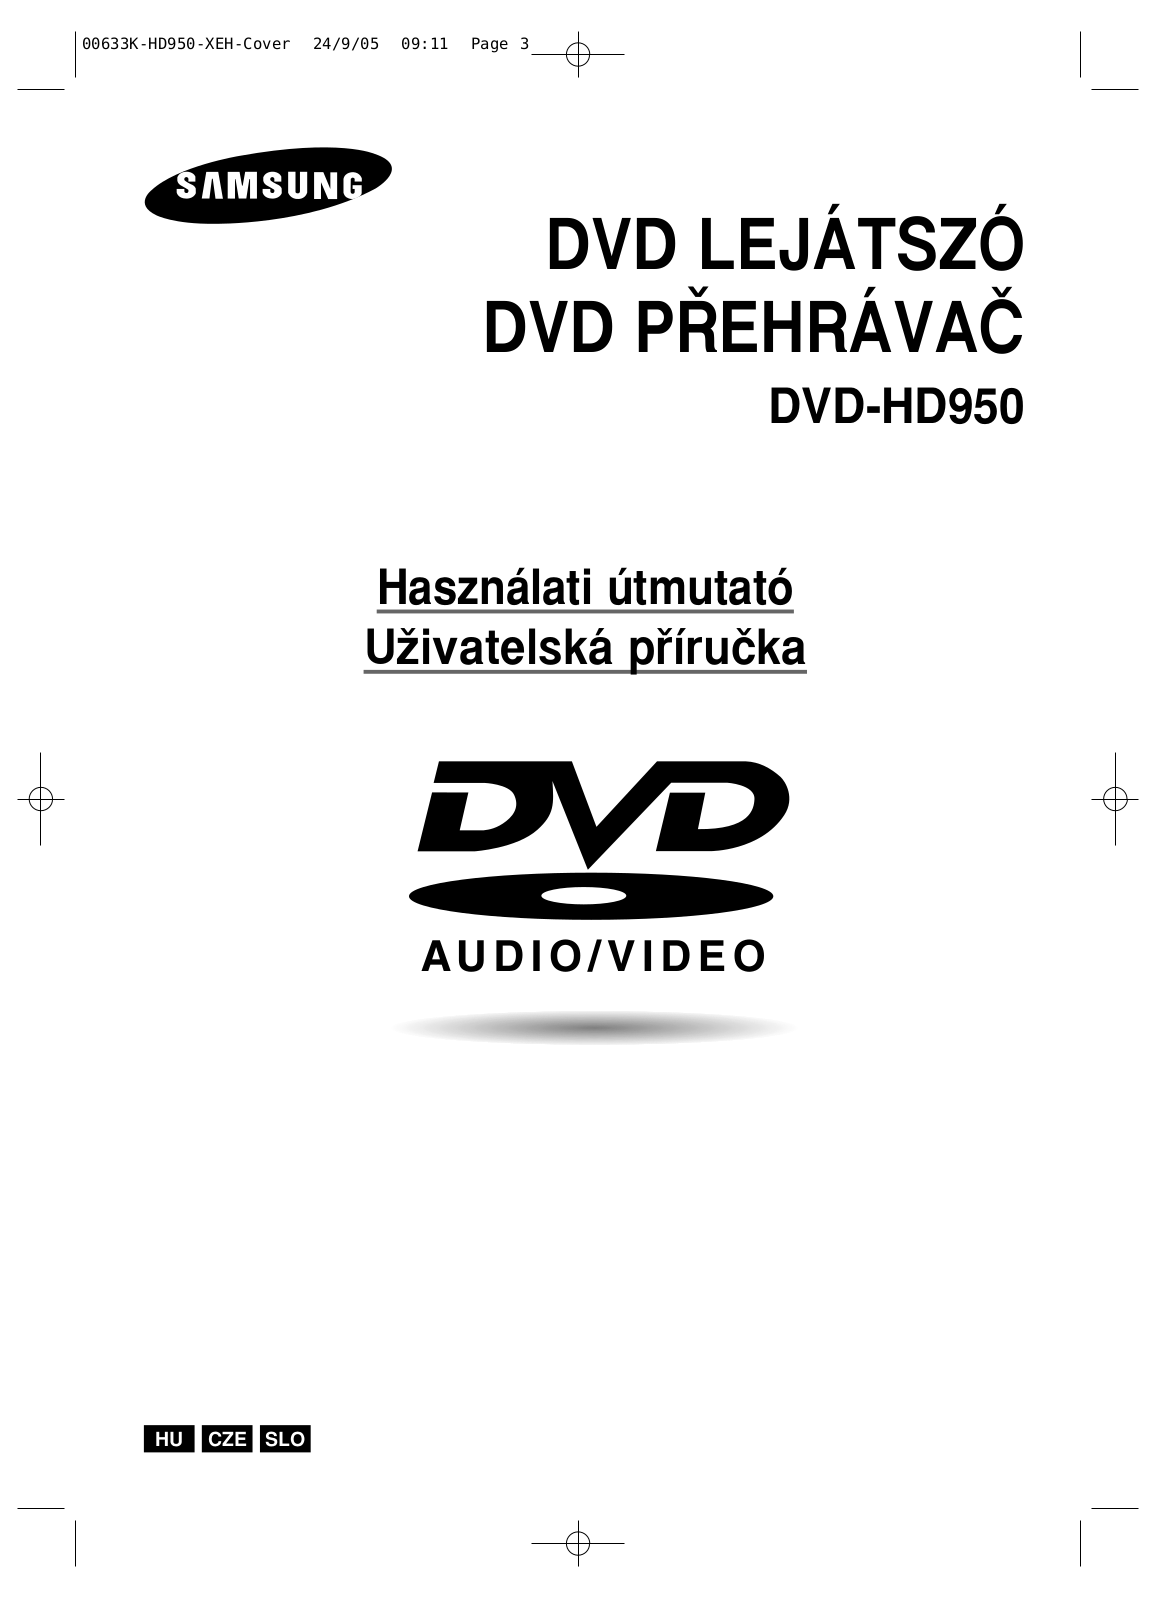 Samsung DVD-HD950 User Manual